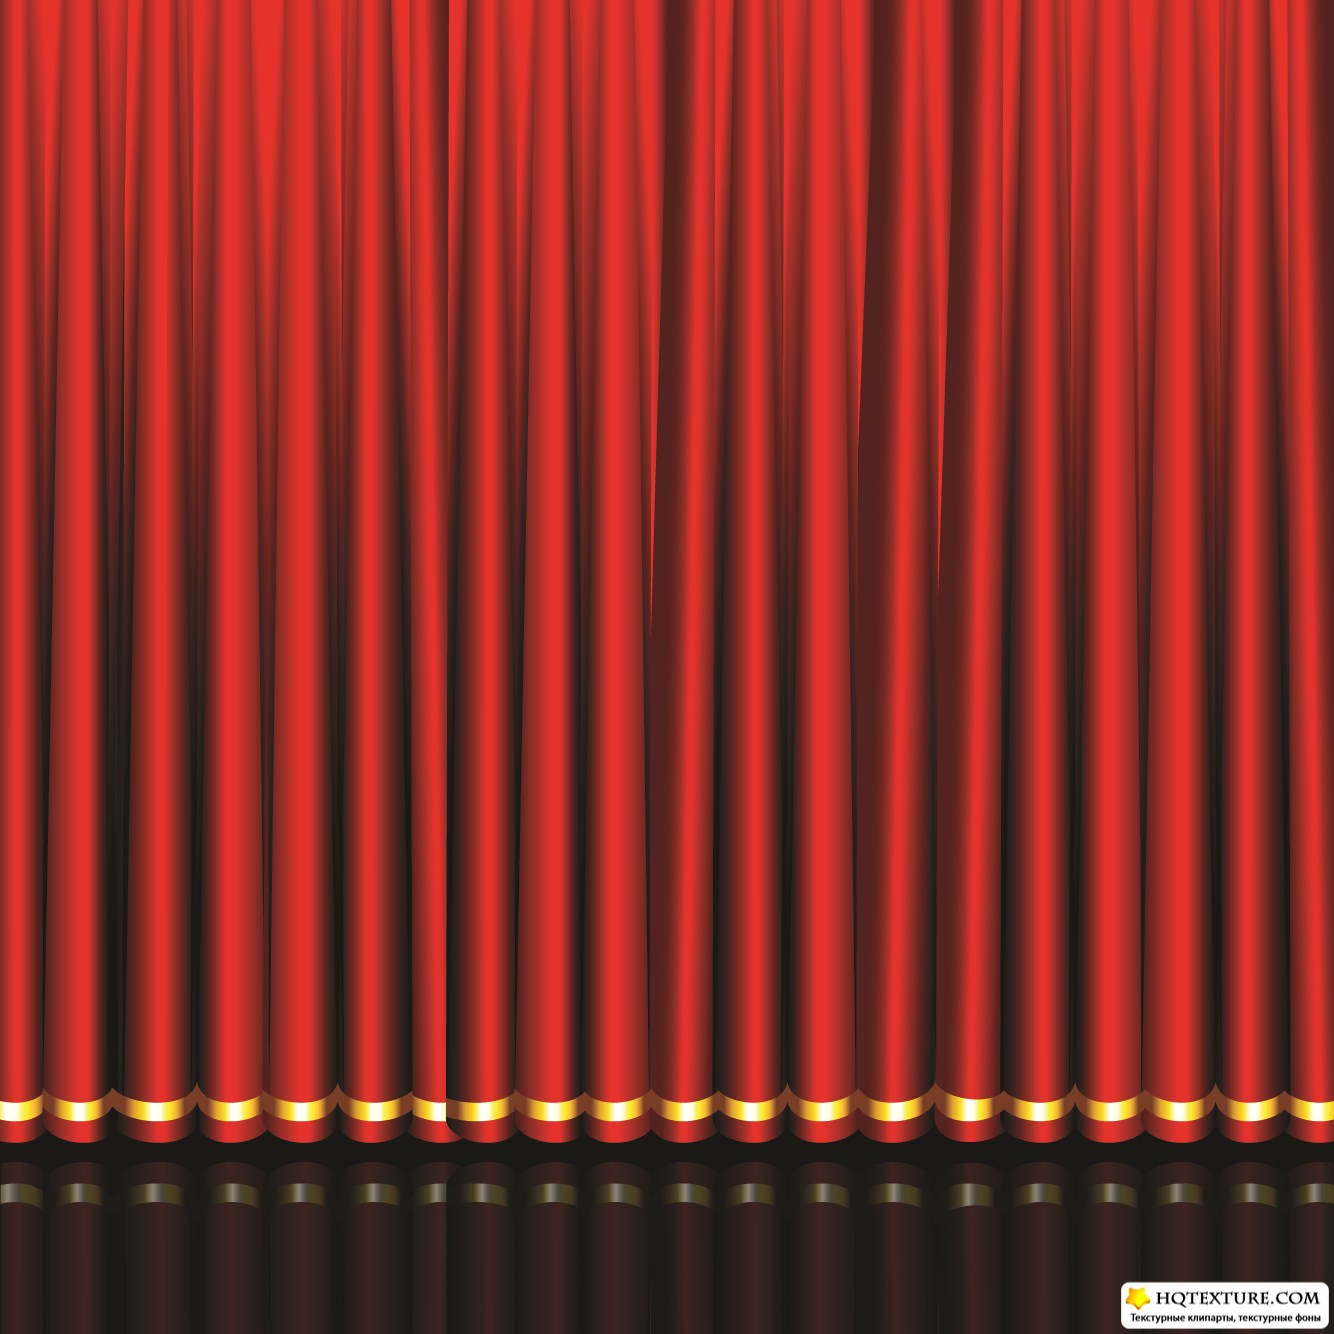 Red Curtains Vector » Векторные клипарты, текстурные фоны, бекграунды